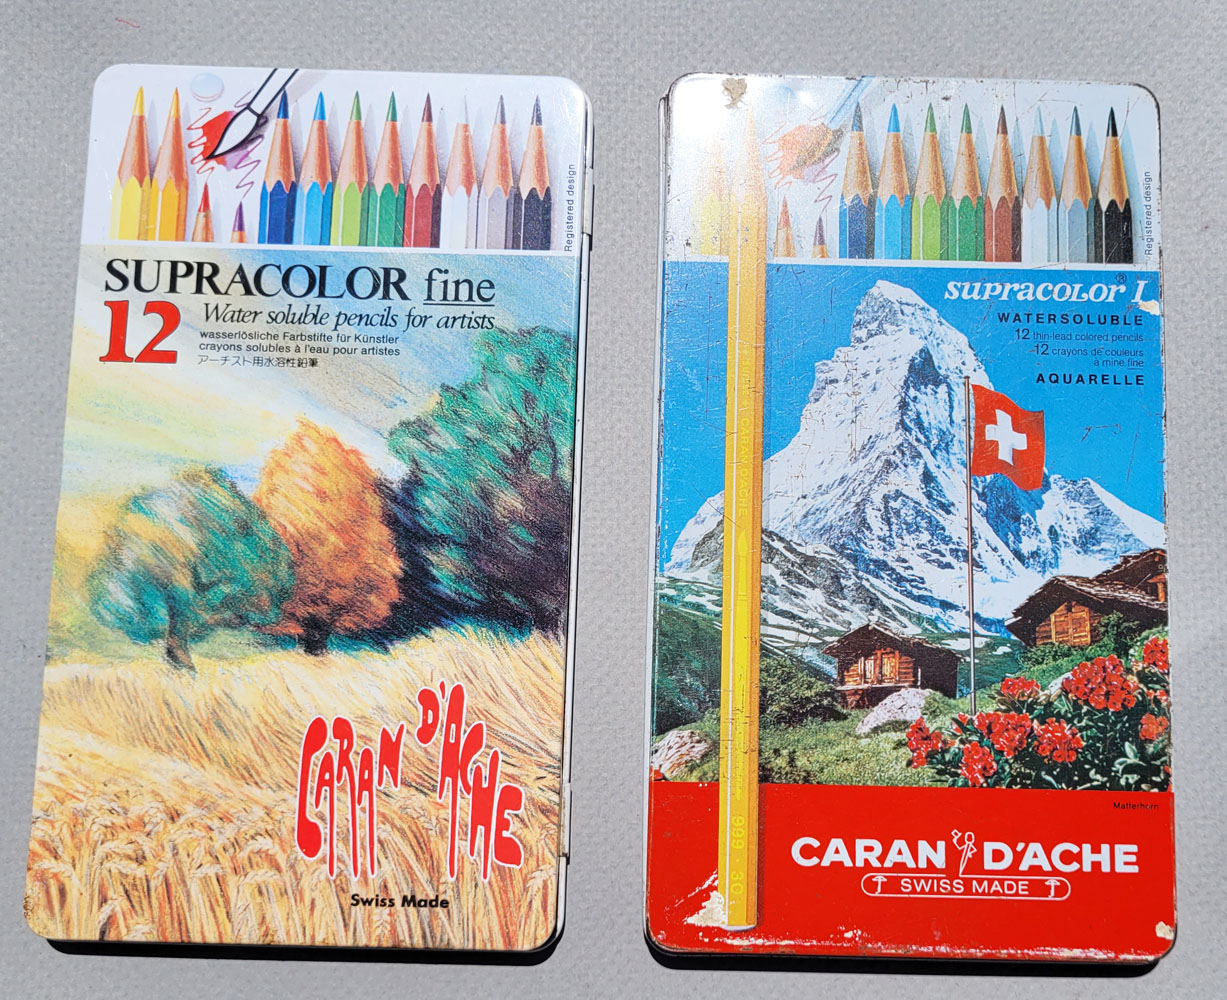 Caran d'Ache Swisscolor Water-Soluble Colored Pencils - Set of 30